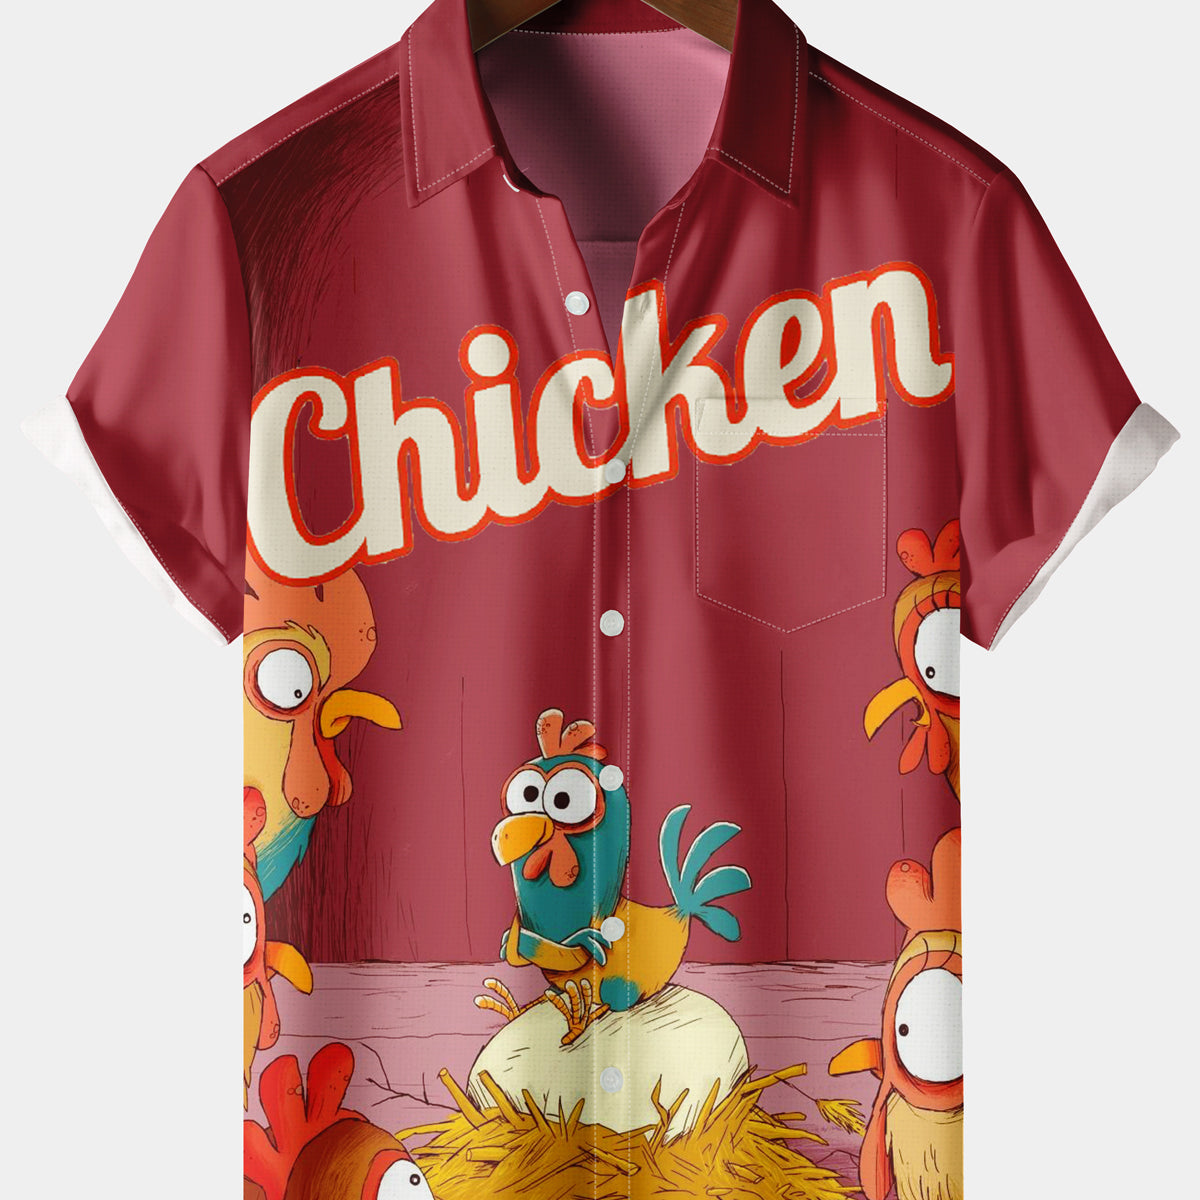 Men's Casual Chicken Chest Pocket Red Short Sleeve Shirt